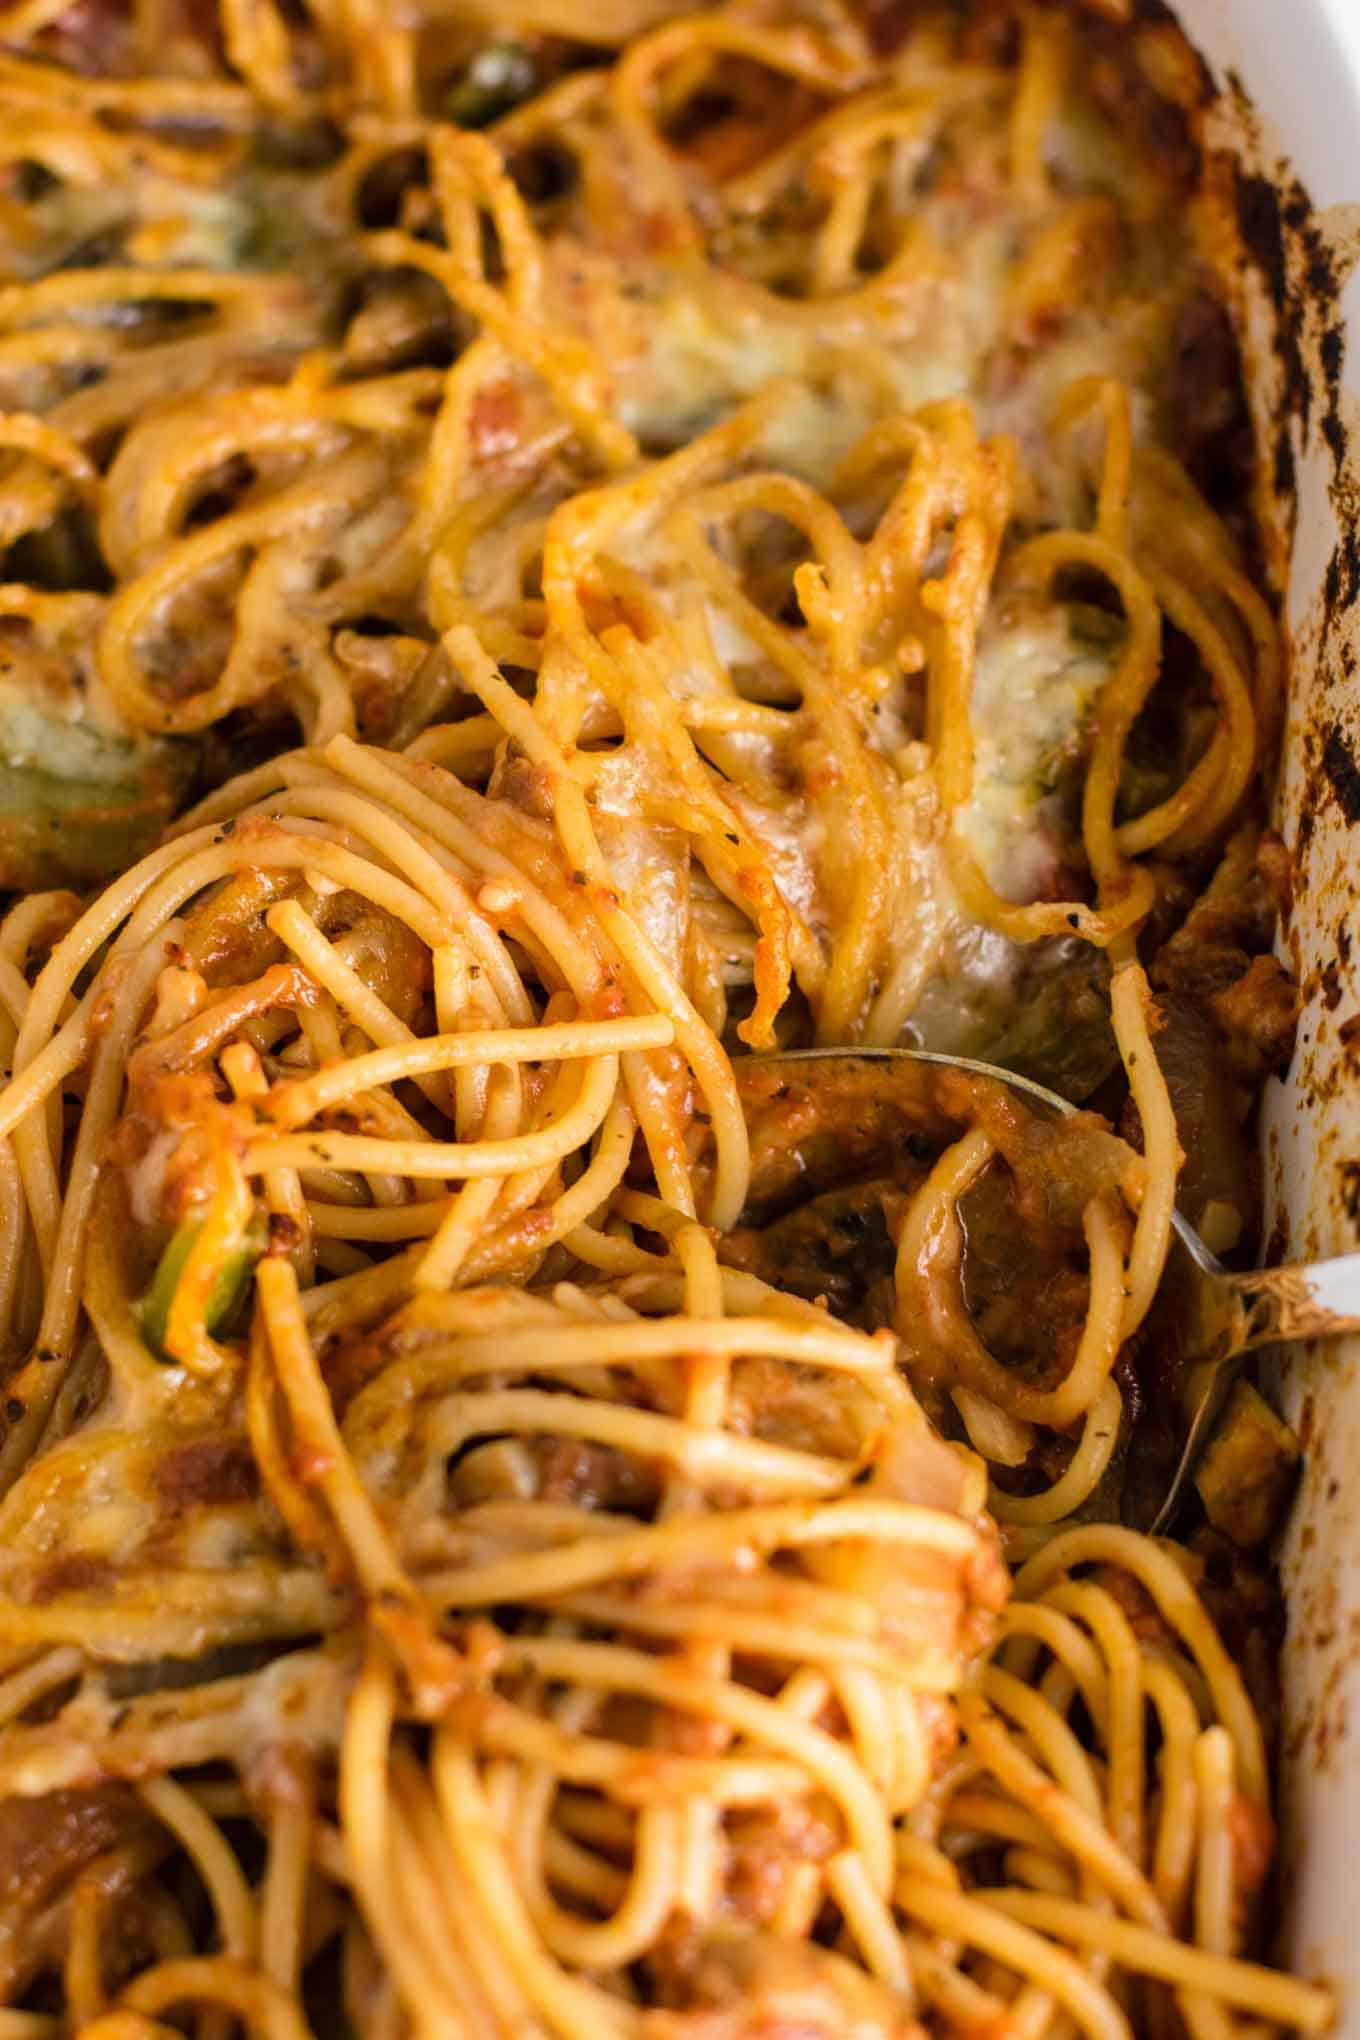 The best vegetarian spaghetti recipe - easy meatless dinner that tastes delicious! #meatless #vegetarian #bakedspaghetti #dinner #vegetarianspaghetti